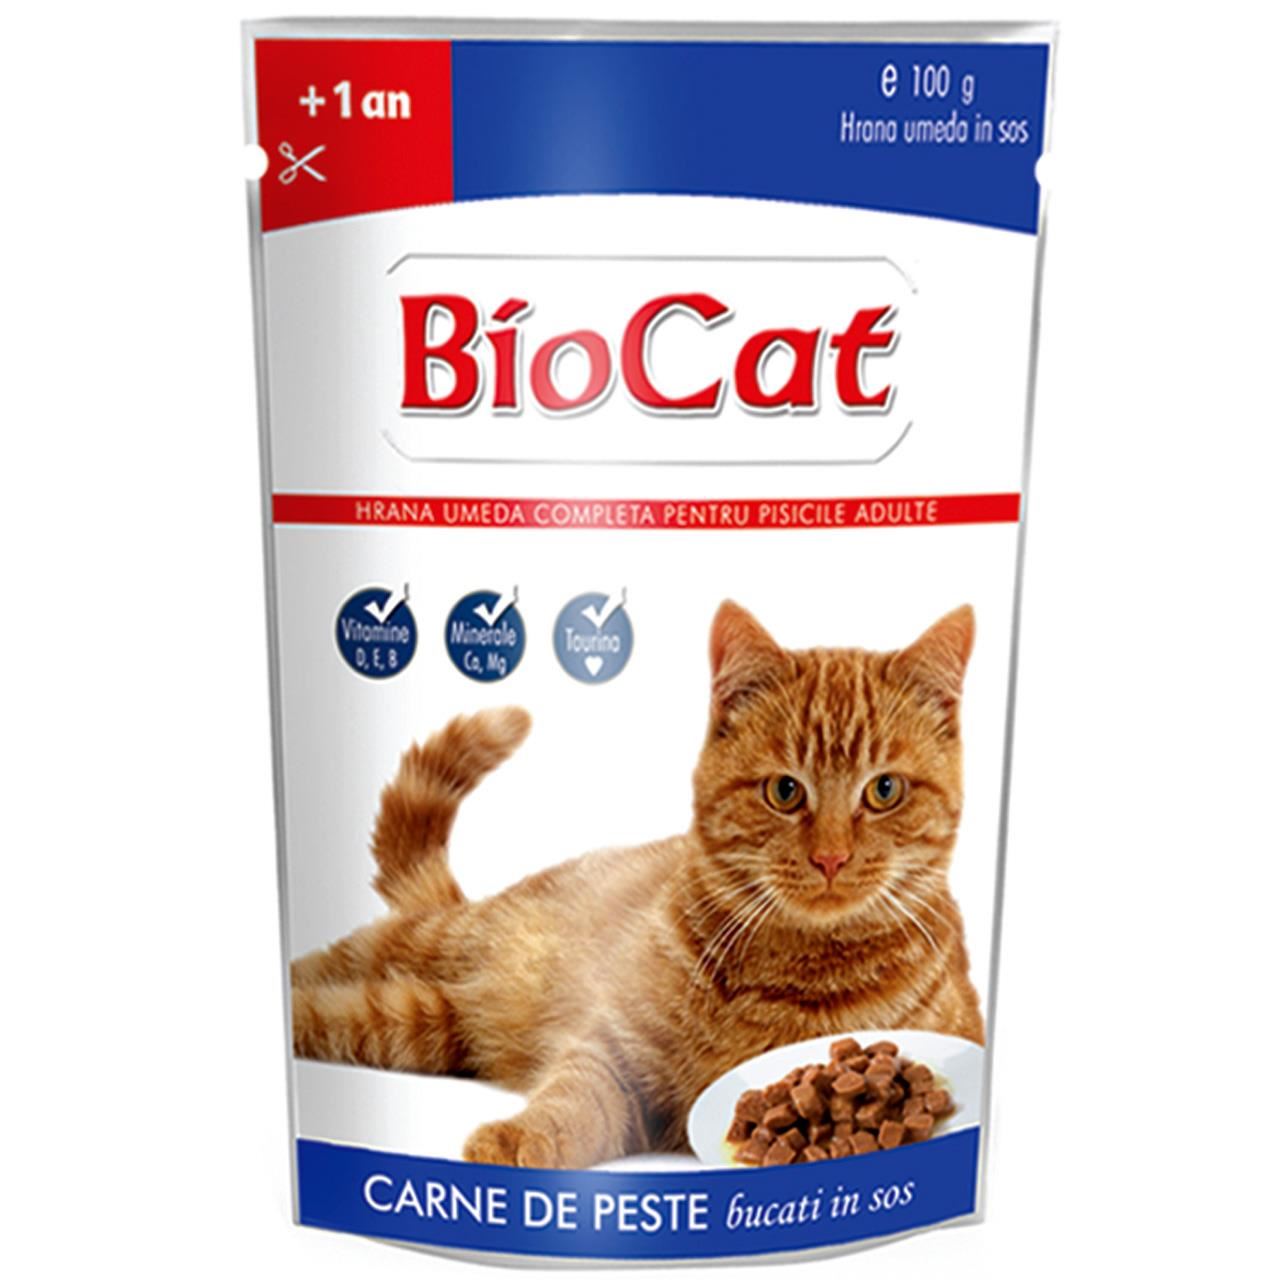 Hrana Umeda Pentru Pisici Biocat Plic Peste In Sos 100 Gr (24/ Bax) BIOCAT